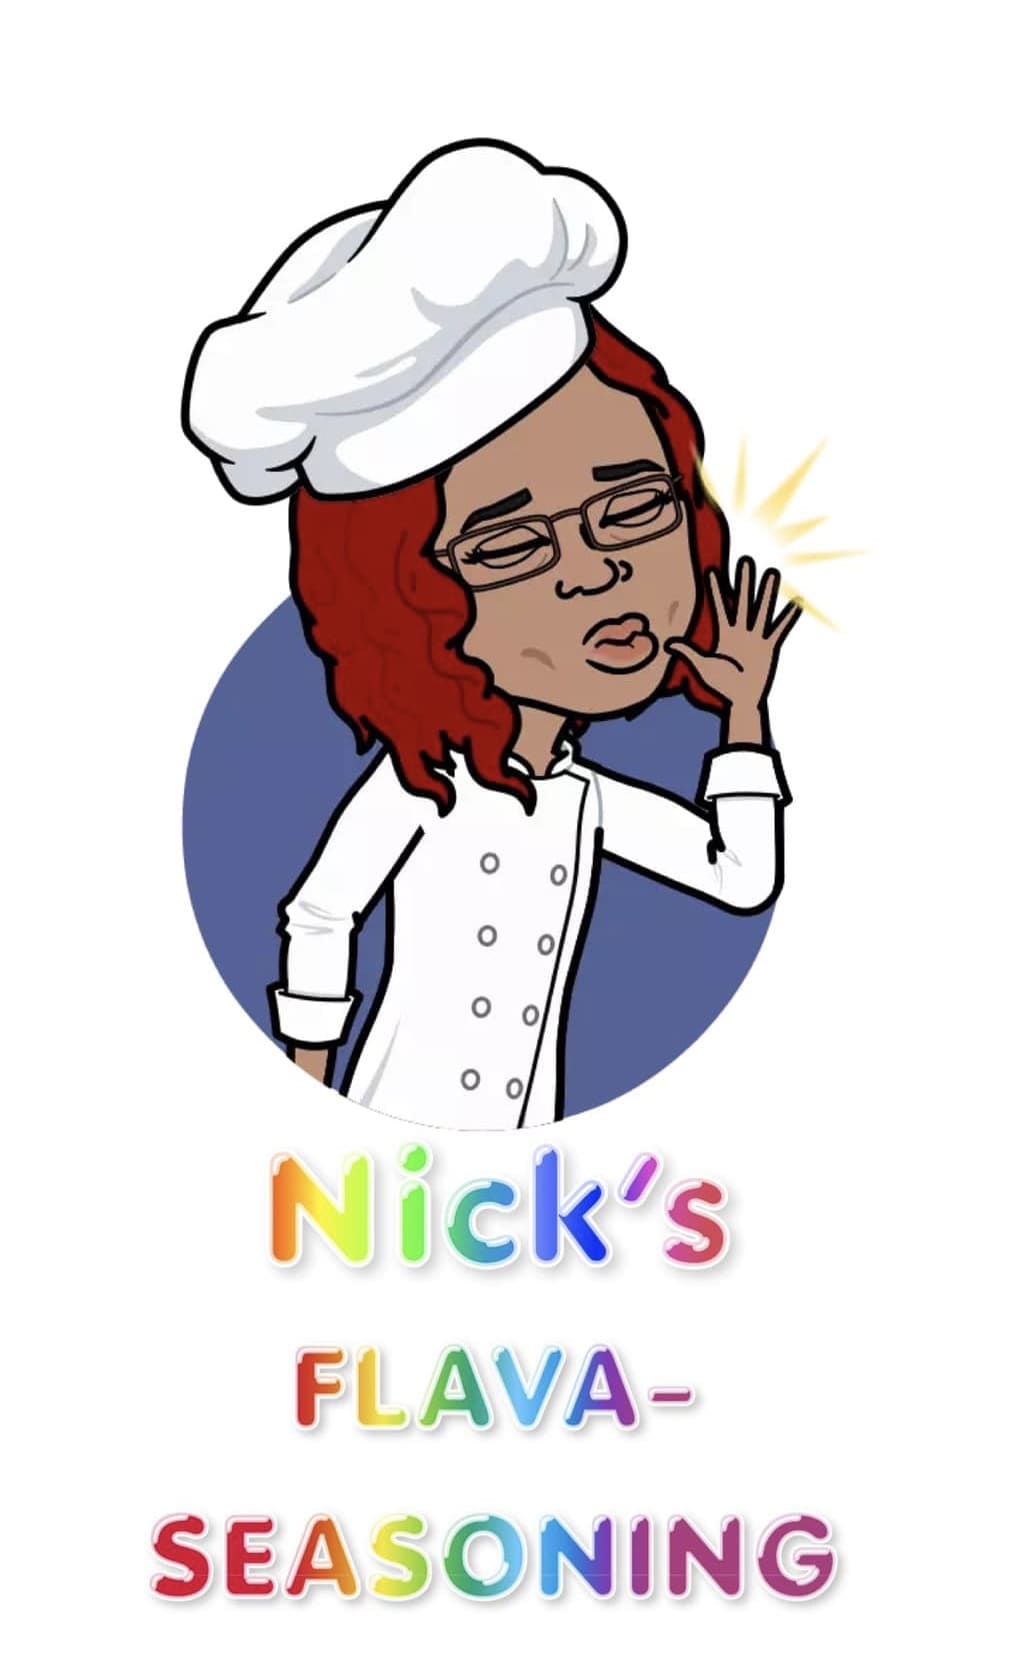 Nick’s Flava-Seasoning and Kitchen